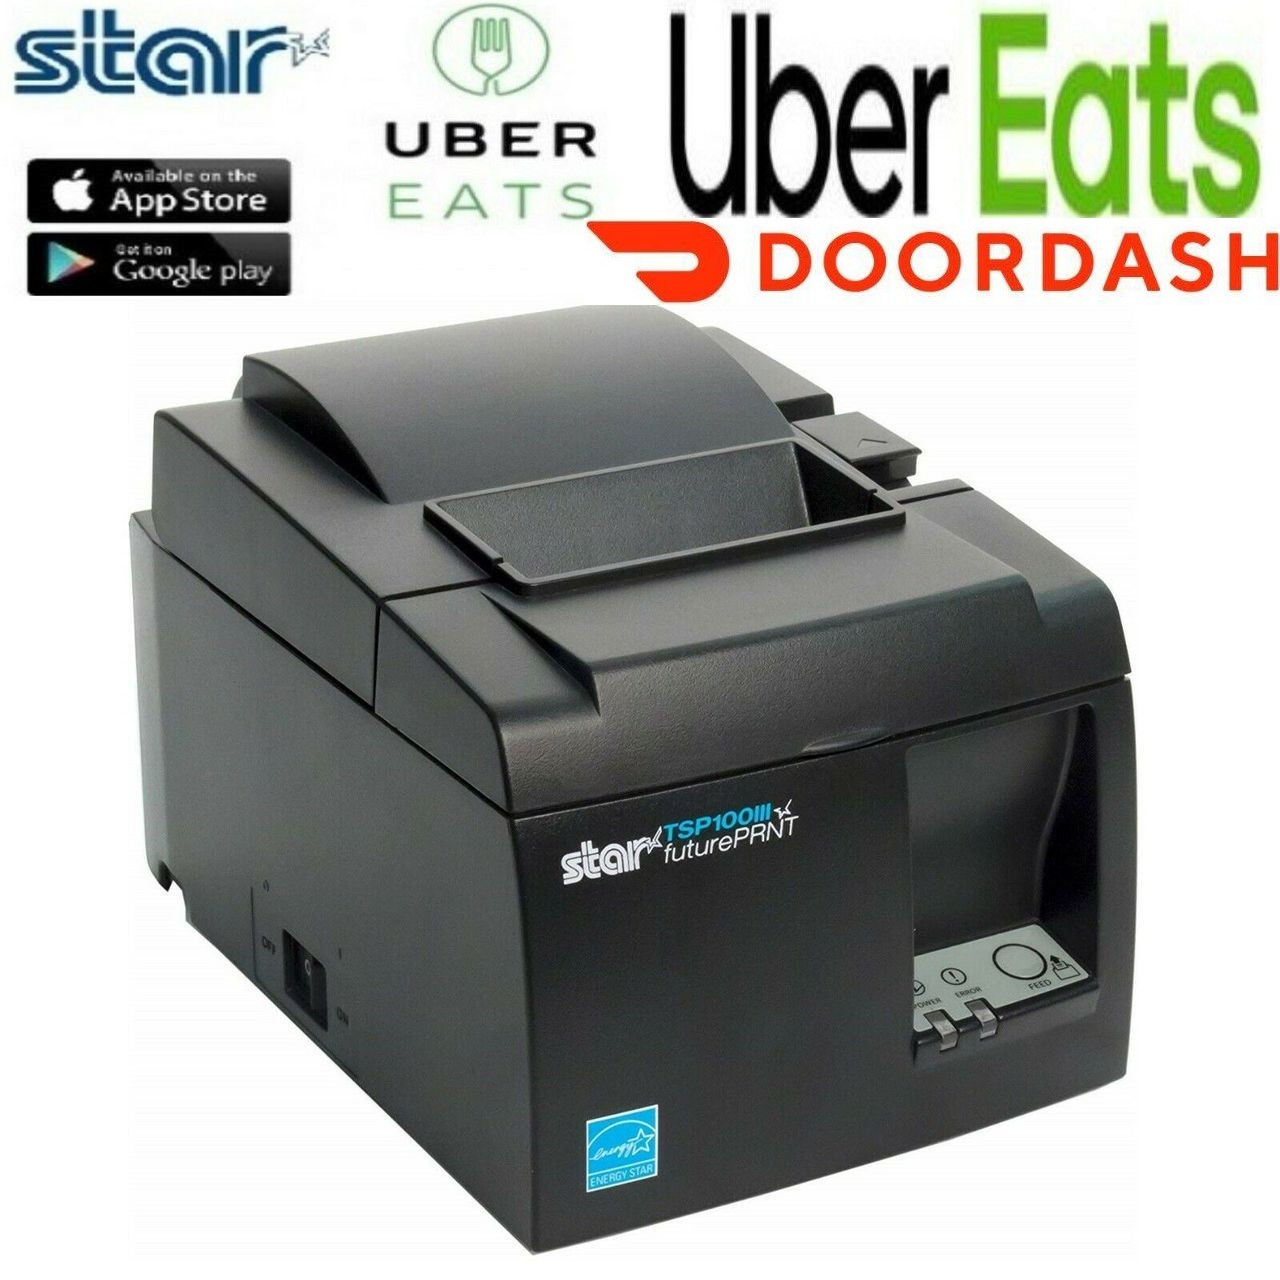 Uber Eats Tsp654ii Bluetooth Receipt Printer Doordash